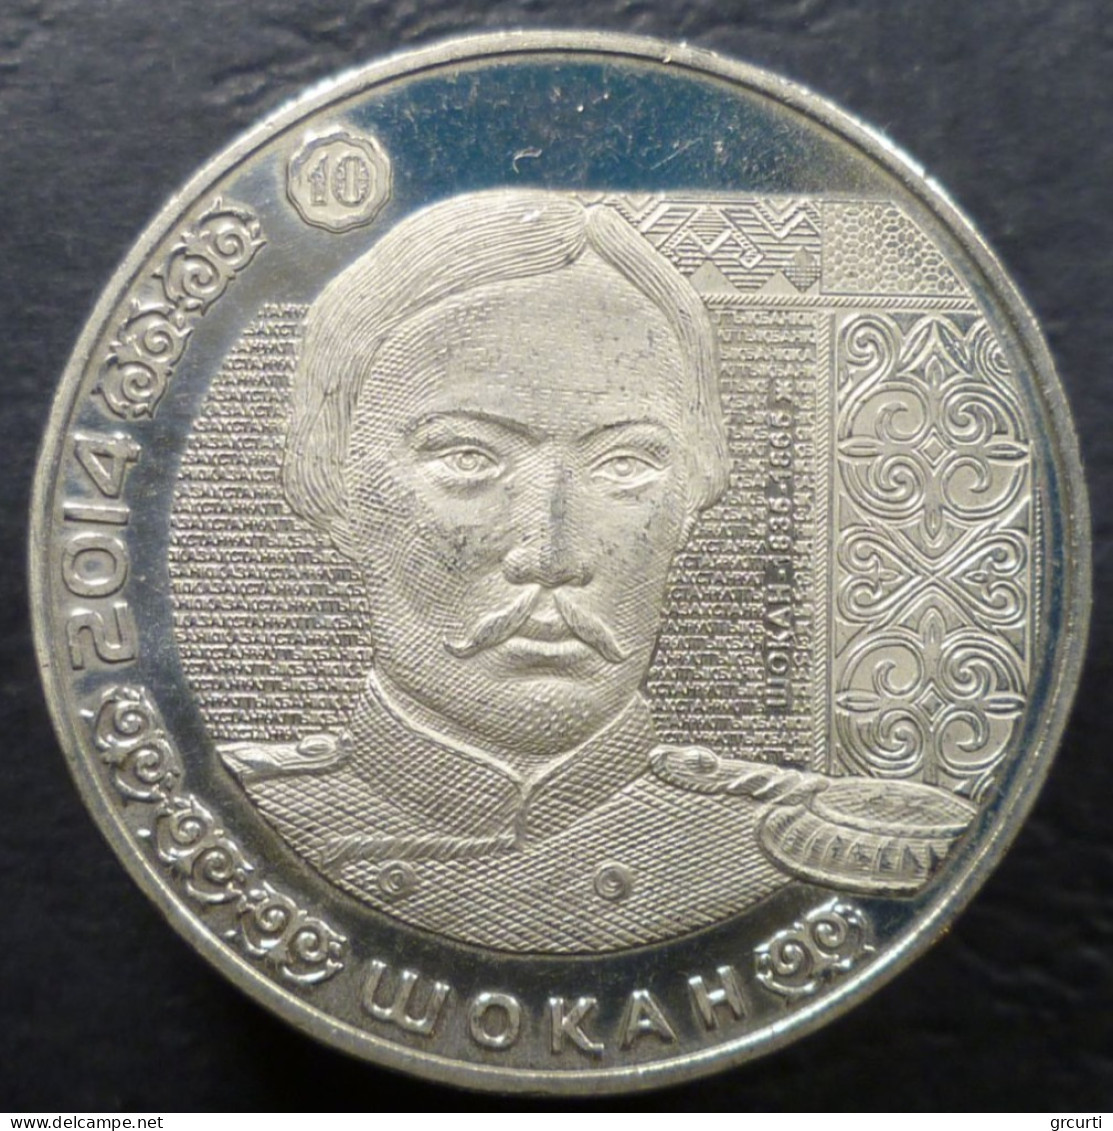 Kazakistan - 50 Tenge 2014 - Ritratti Sulle Banconote - Shoqan Walikhanov (Шоқан) - UC# 295 - Kasachstan